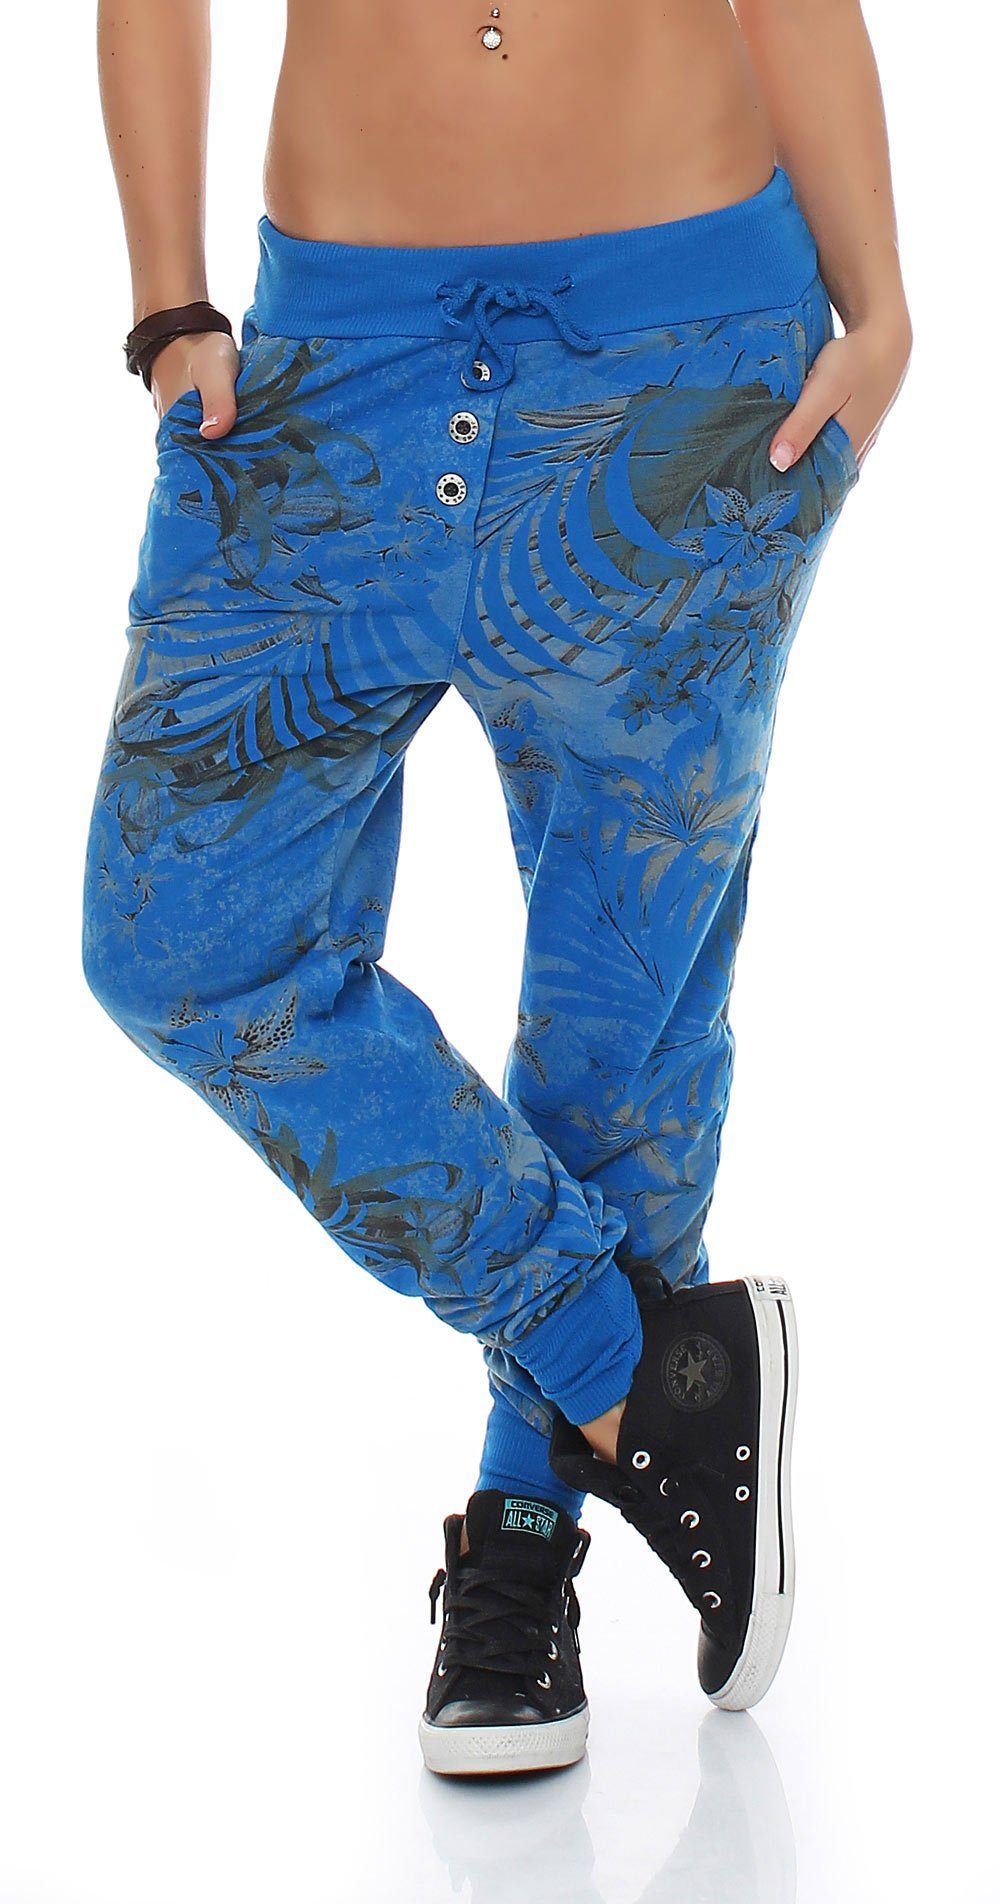 malito more than fashion Jogginghose 83728 Sweatpants mit Jungelprint blau